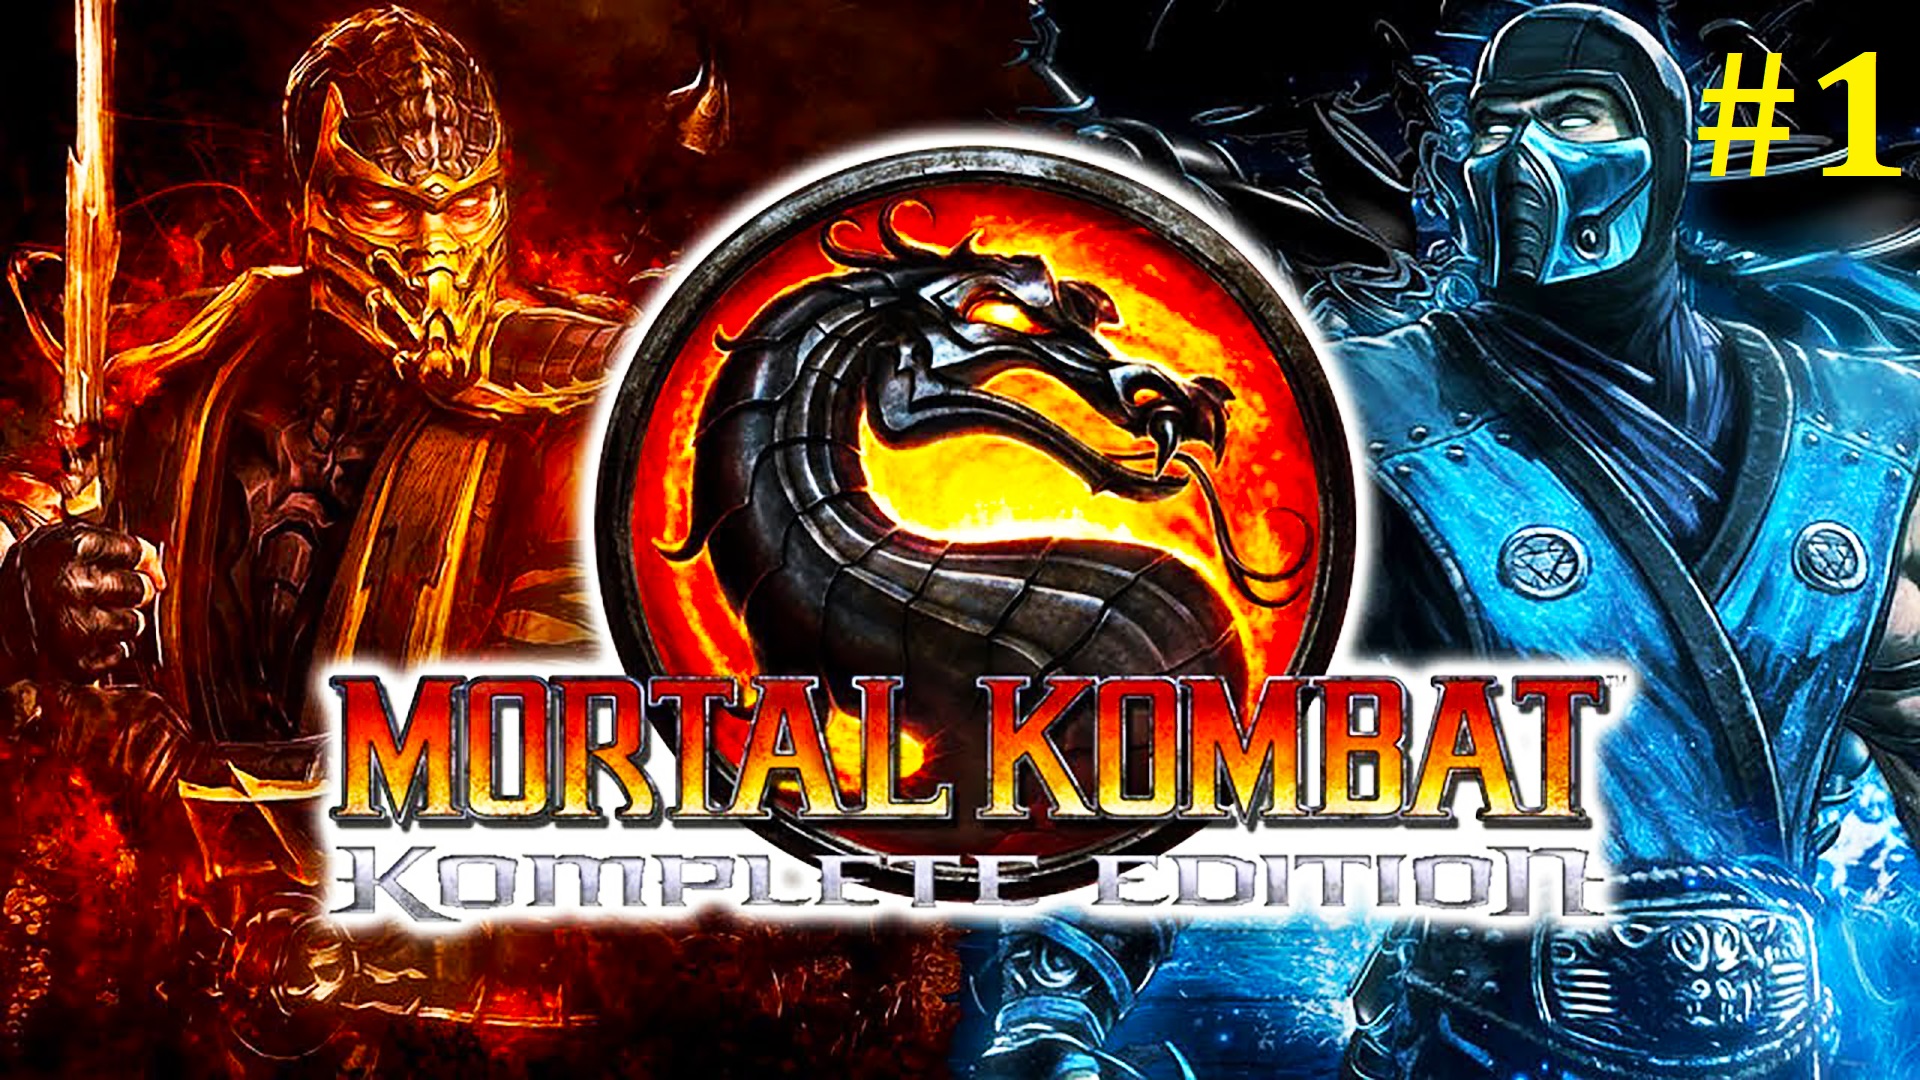 Mortal kombat komplete. Mk9 Komplete Edition. Mortal Kombat 9 Komplete Edition. МК 9 обложка. MK Komplete Edition обложка.